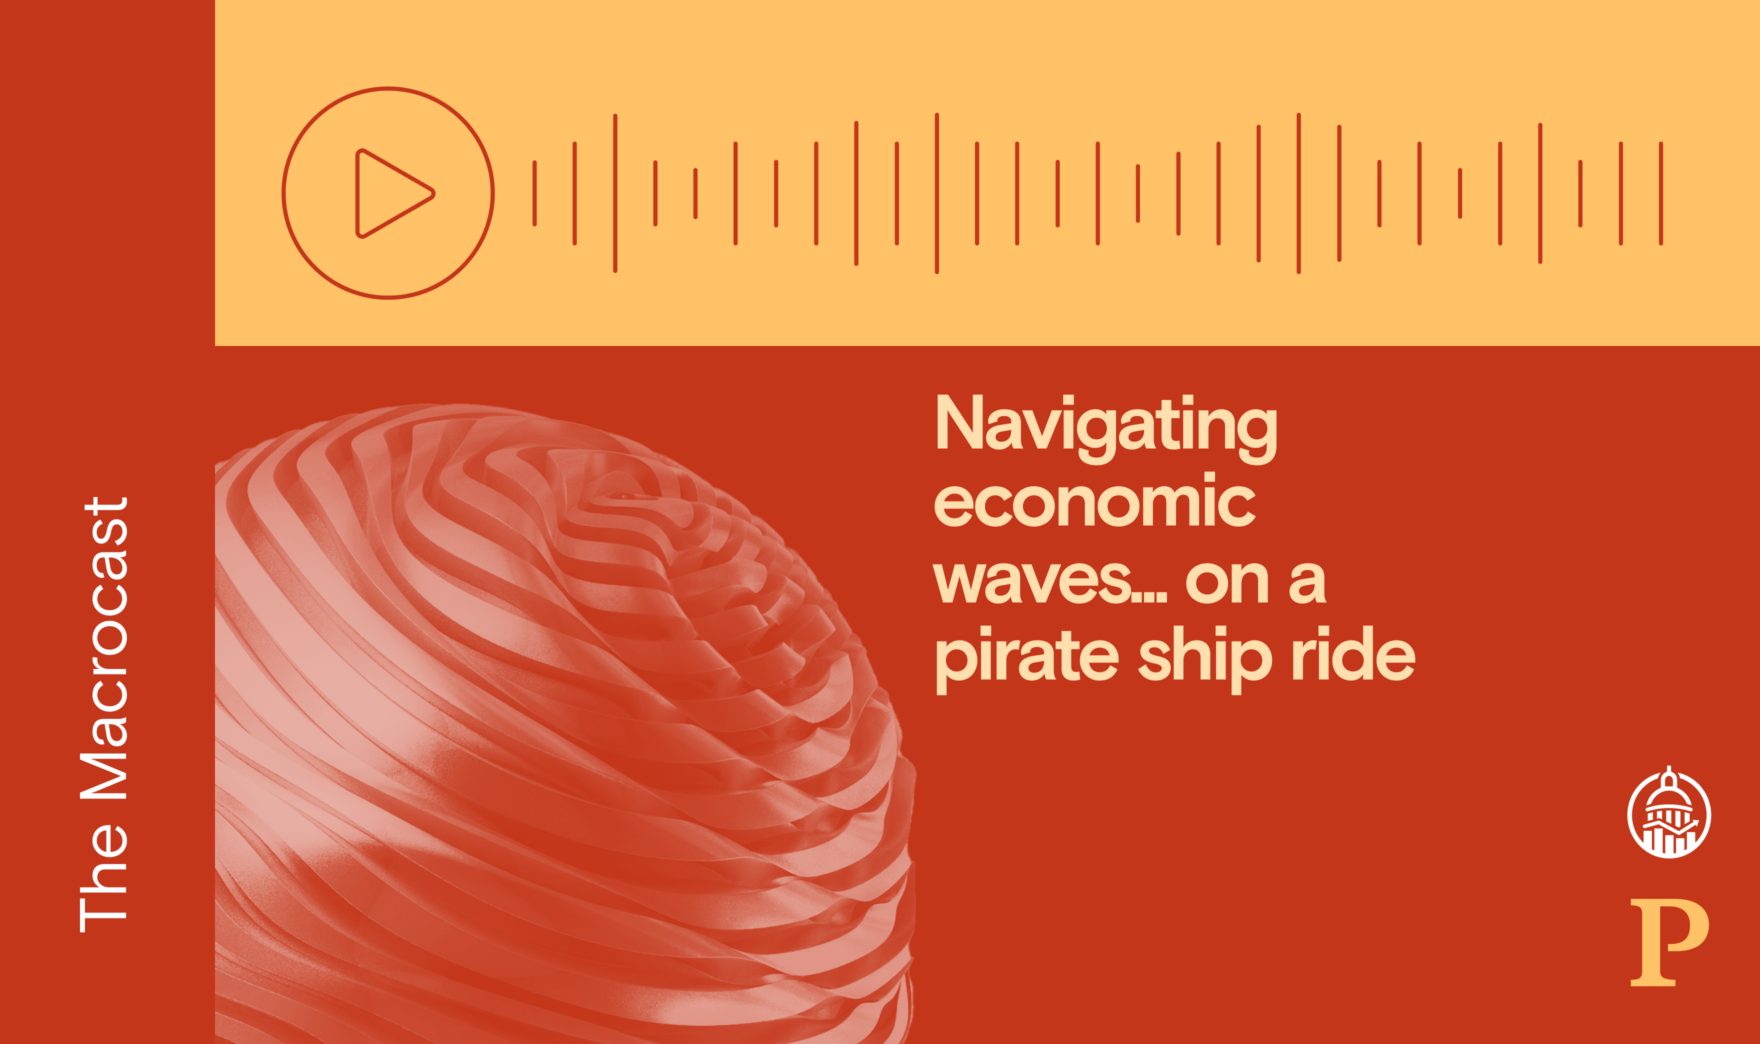 Macrocast: Navigating economic waves… on a pirate ship ride